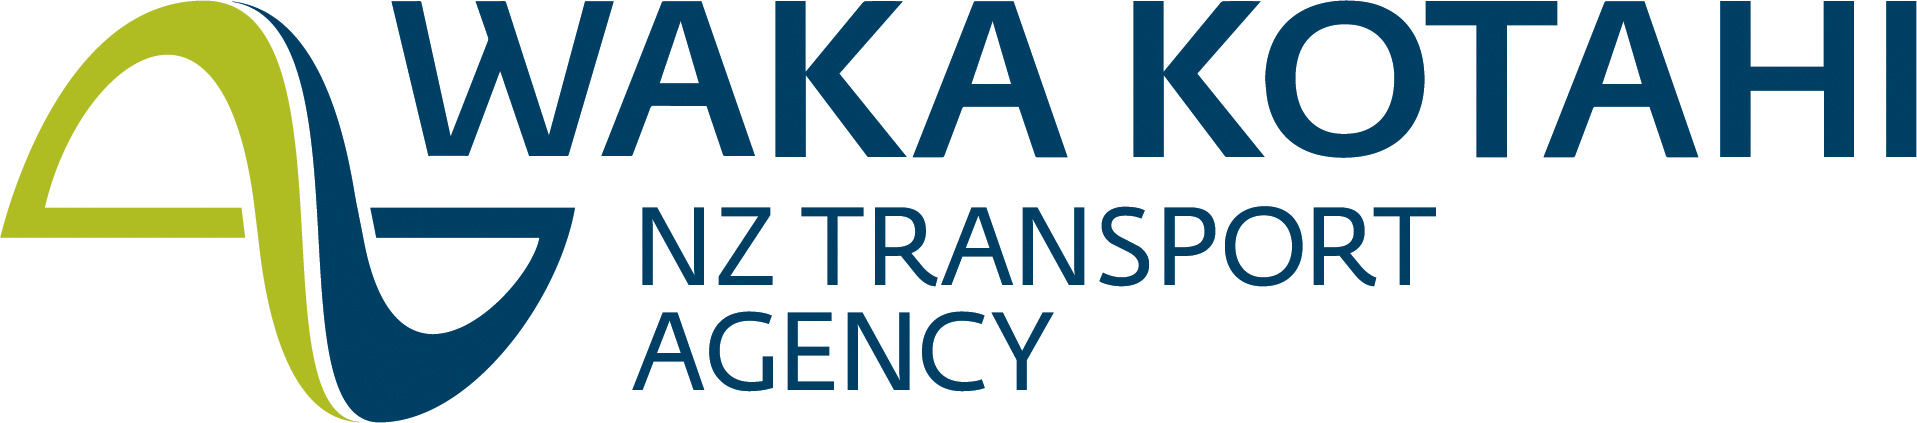 Waka Kotahi New Zealand Transport Agency